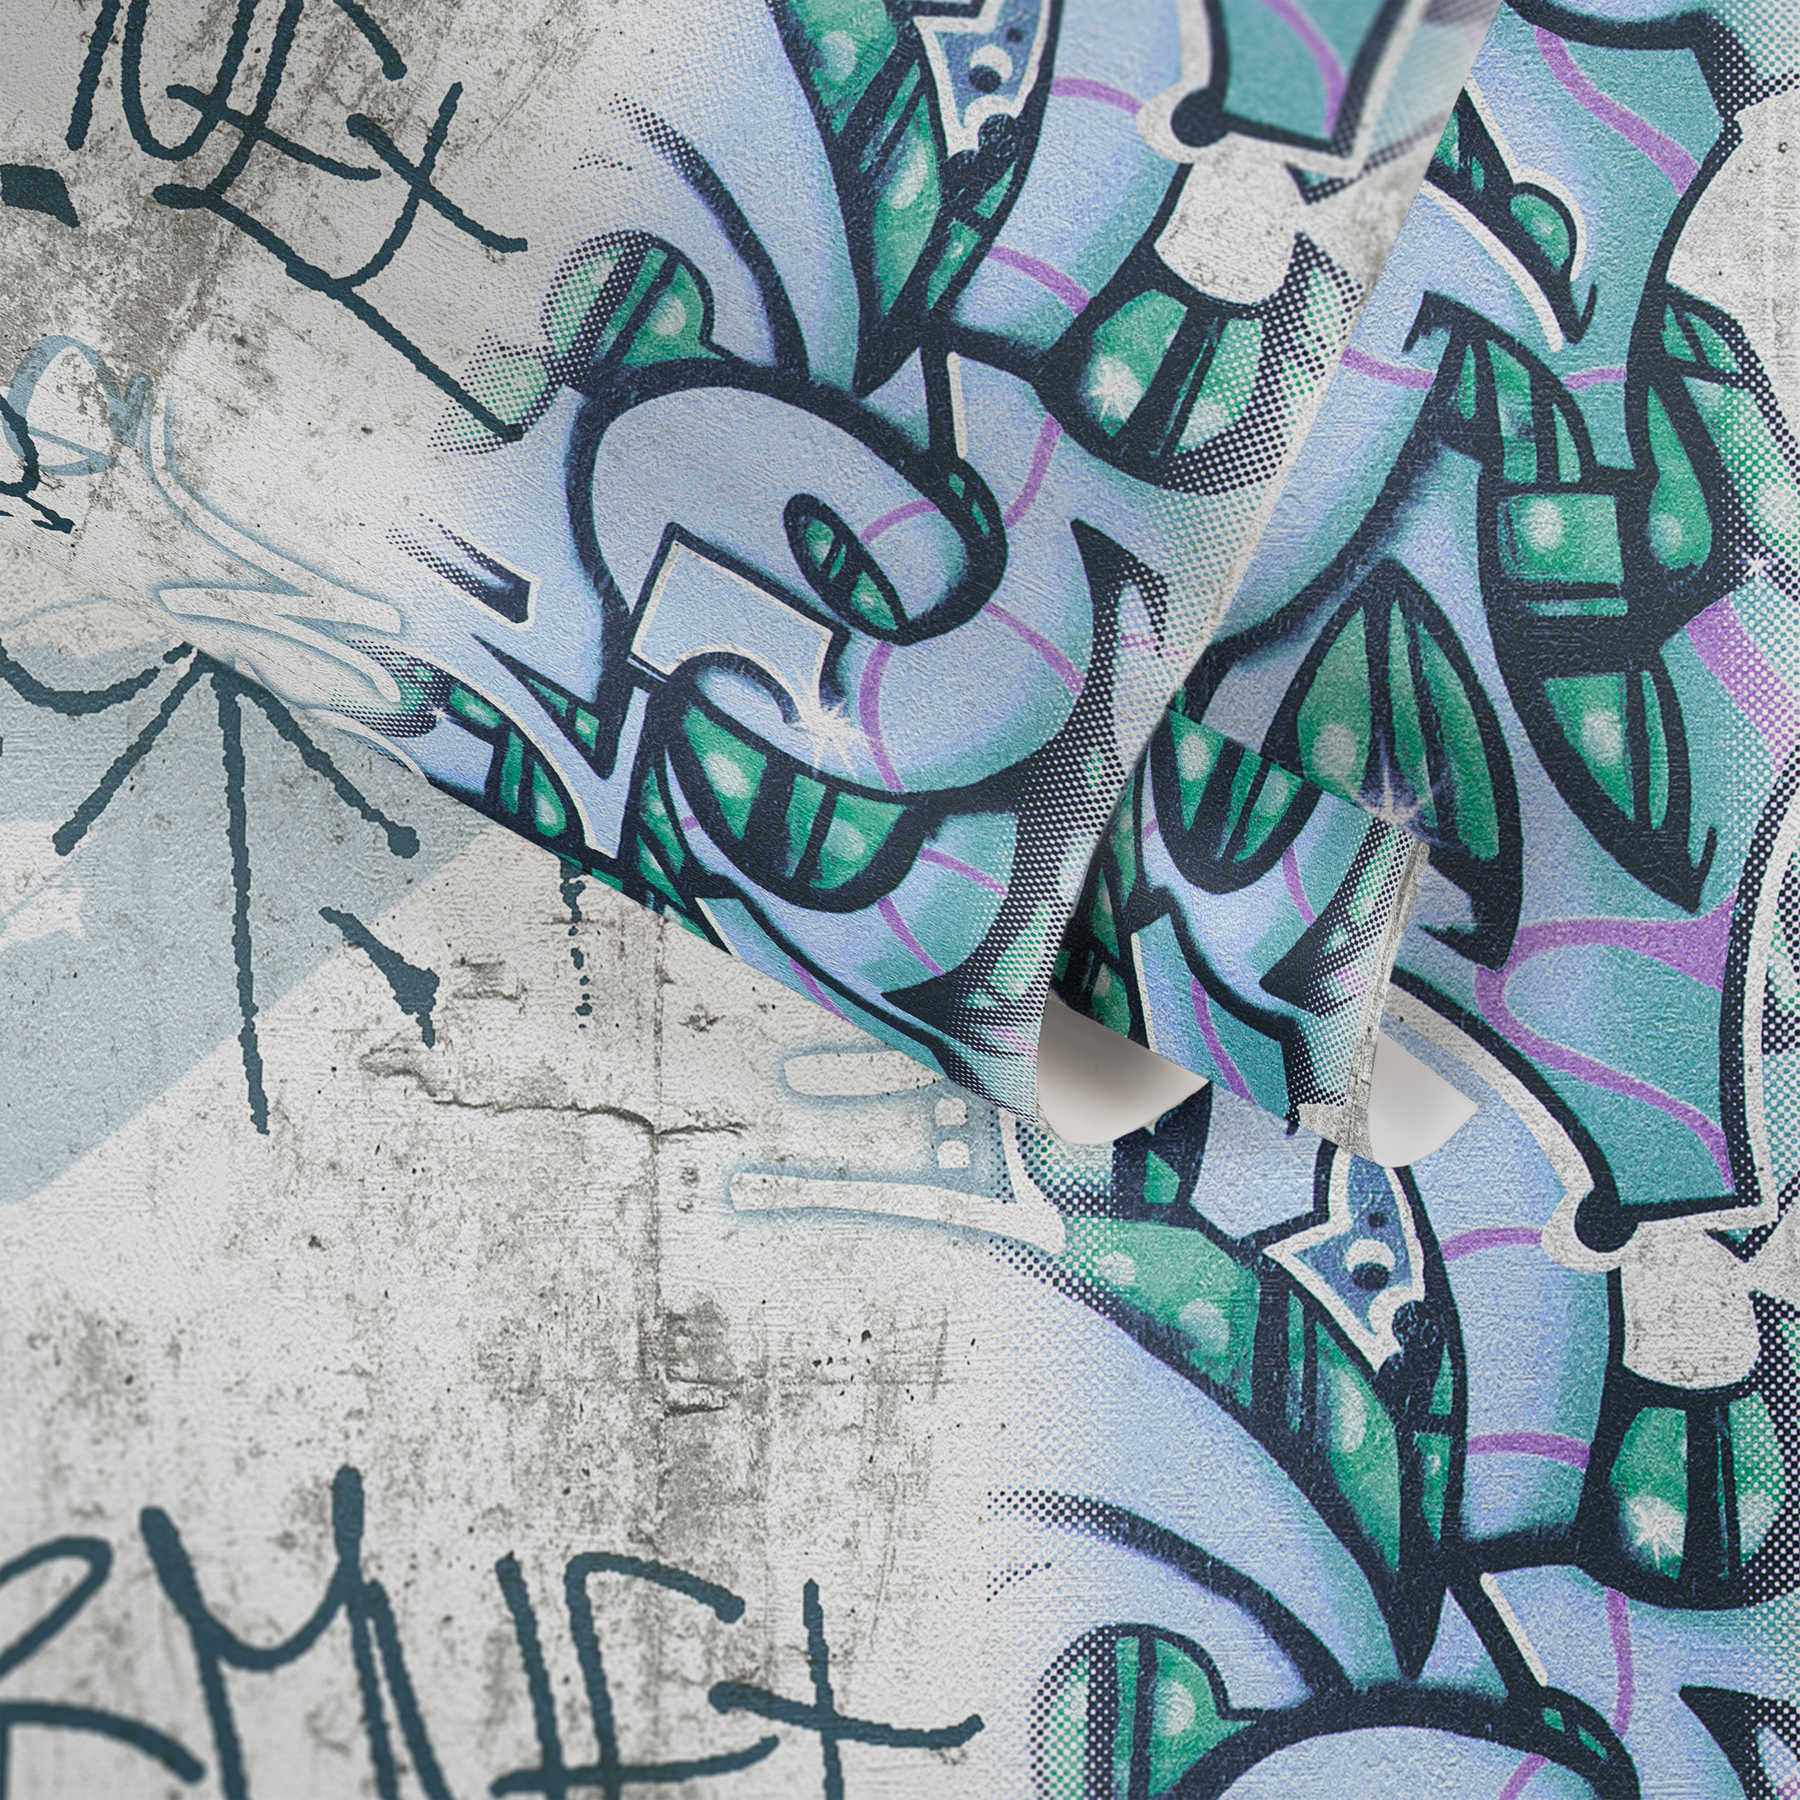             Youth room wallpaper graffiti in street look - grey, green
        